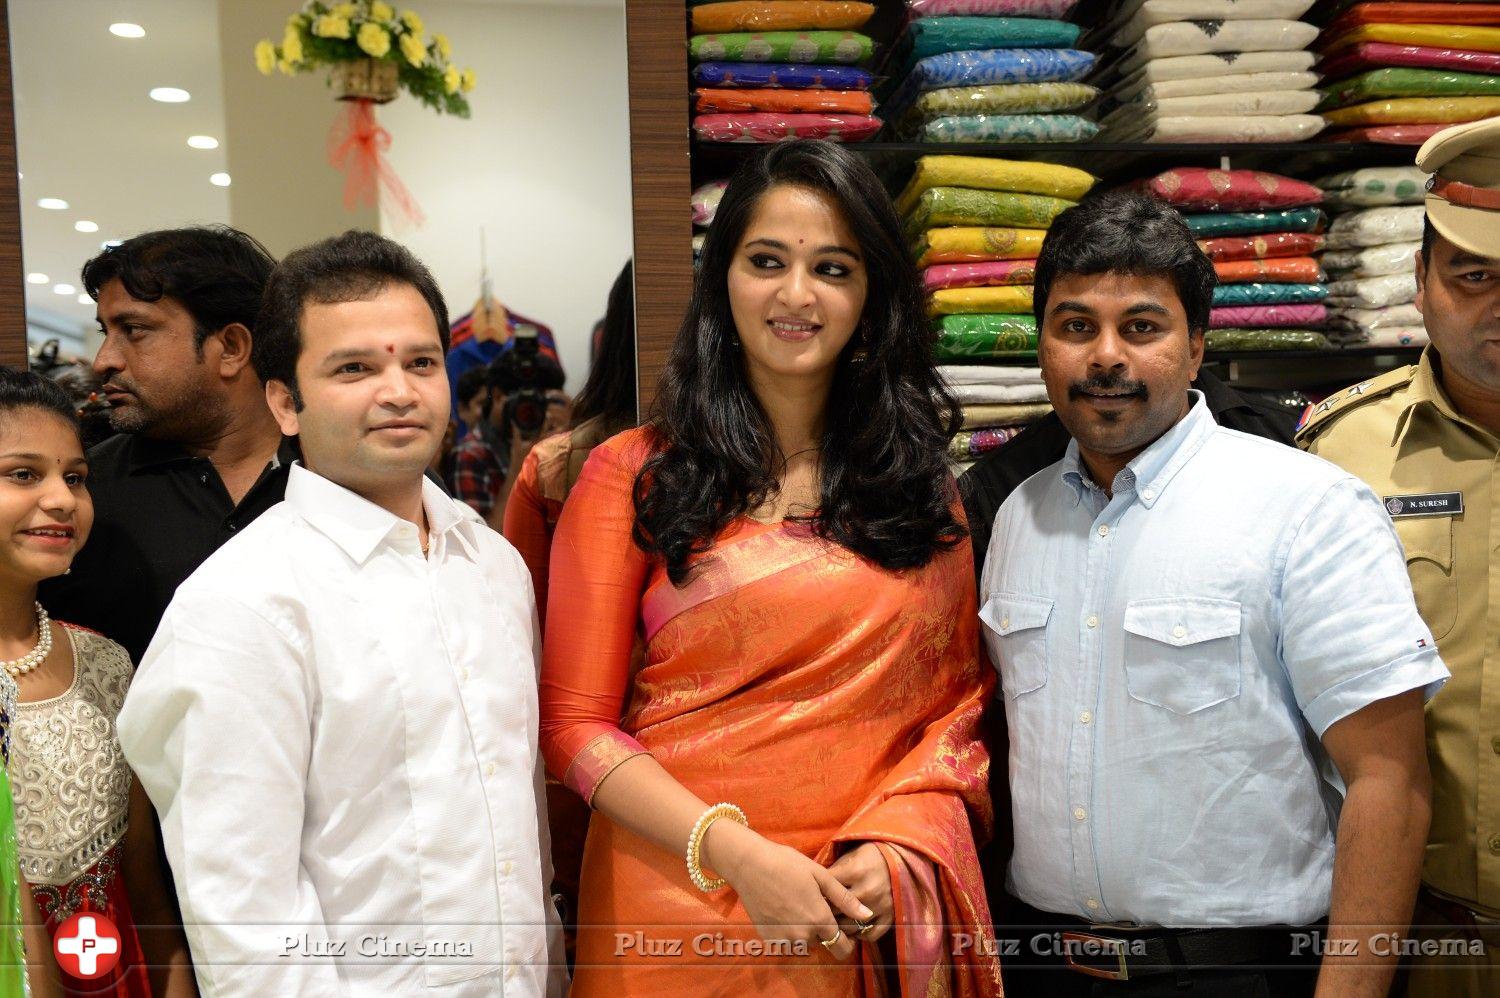 Anushka Shetty - Kalamandir New Showrooms Launched at Rajahmundry and Kakinada Photos | Picture 684043